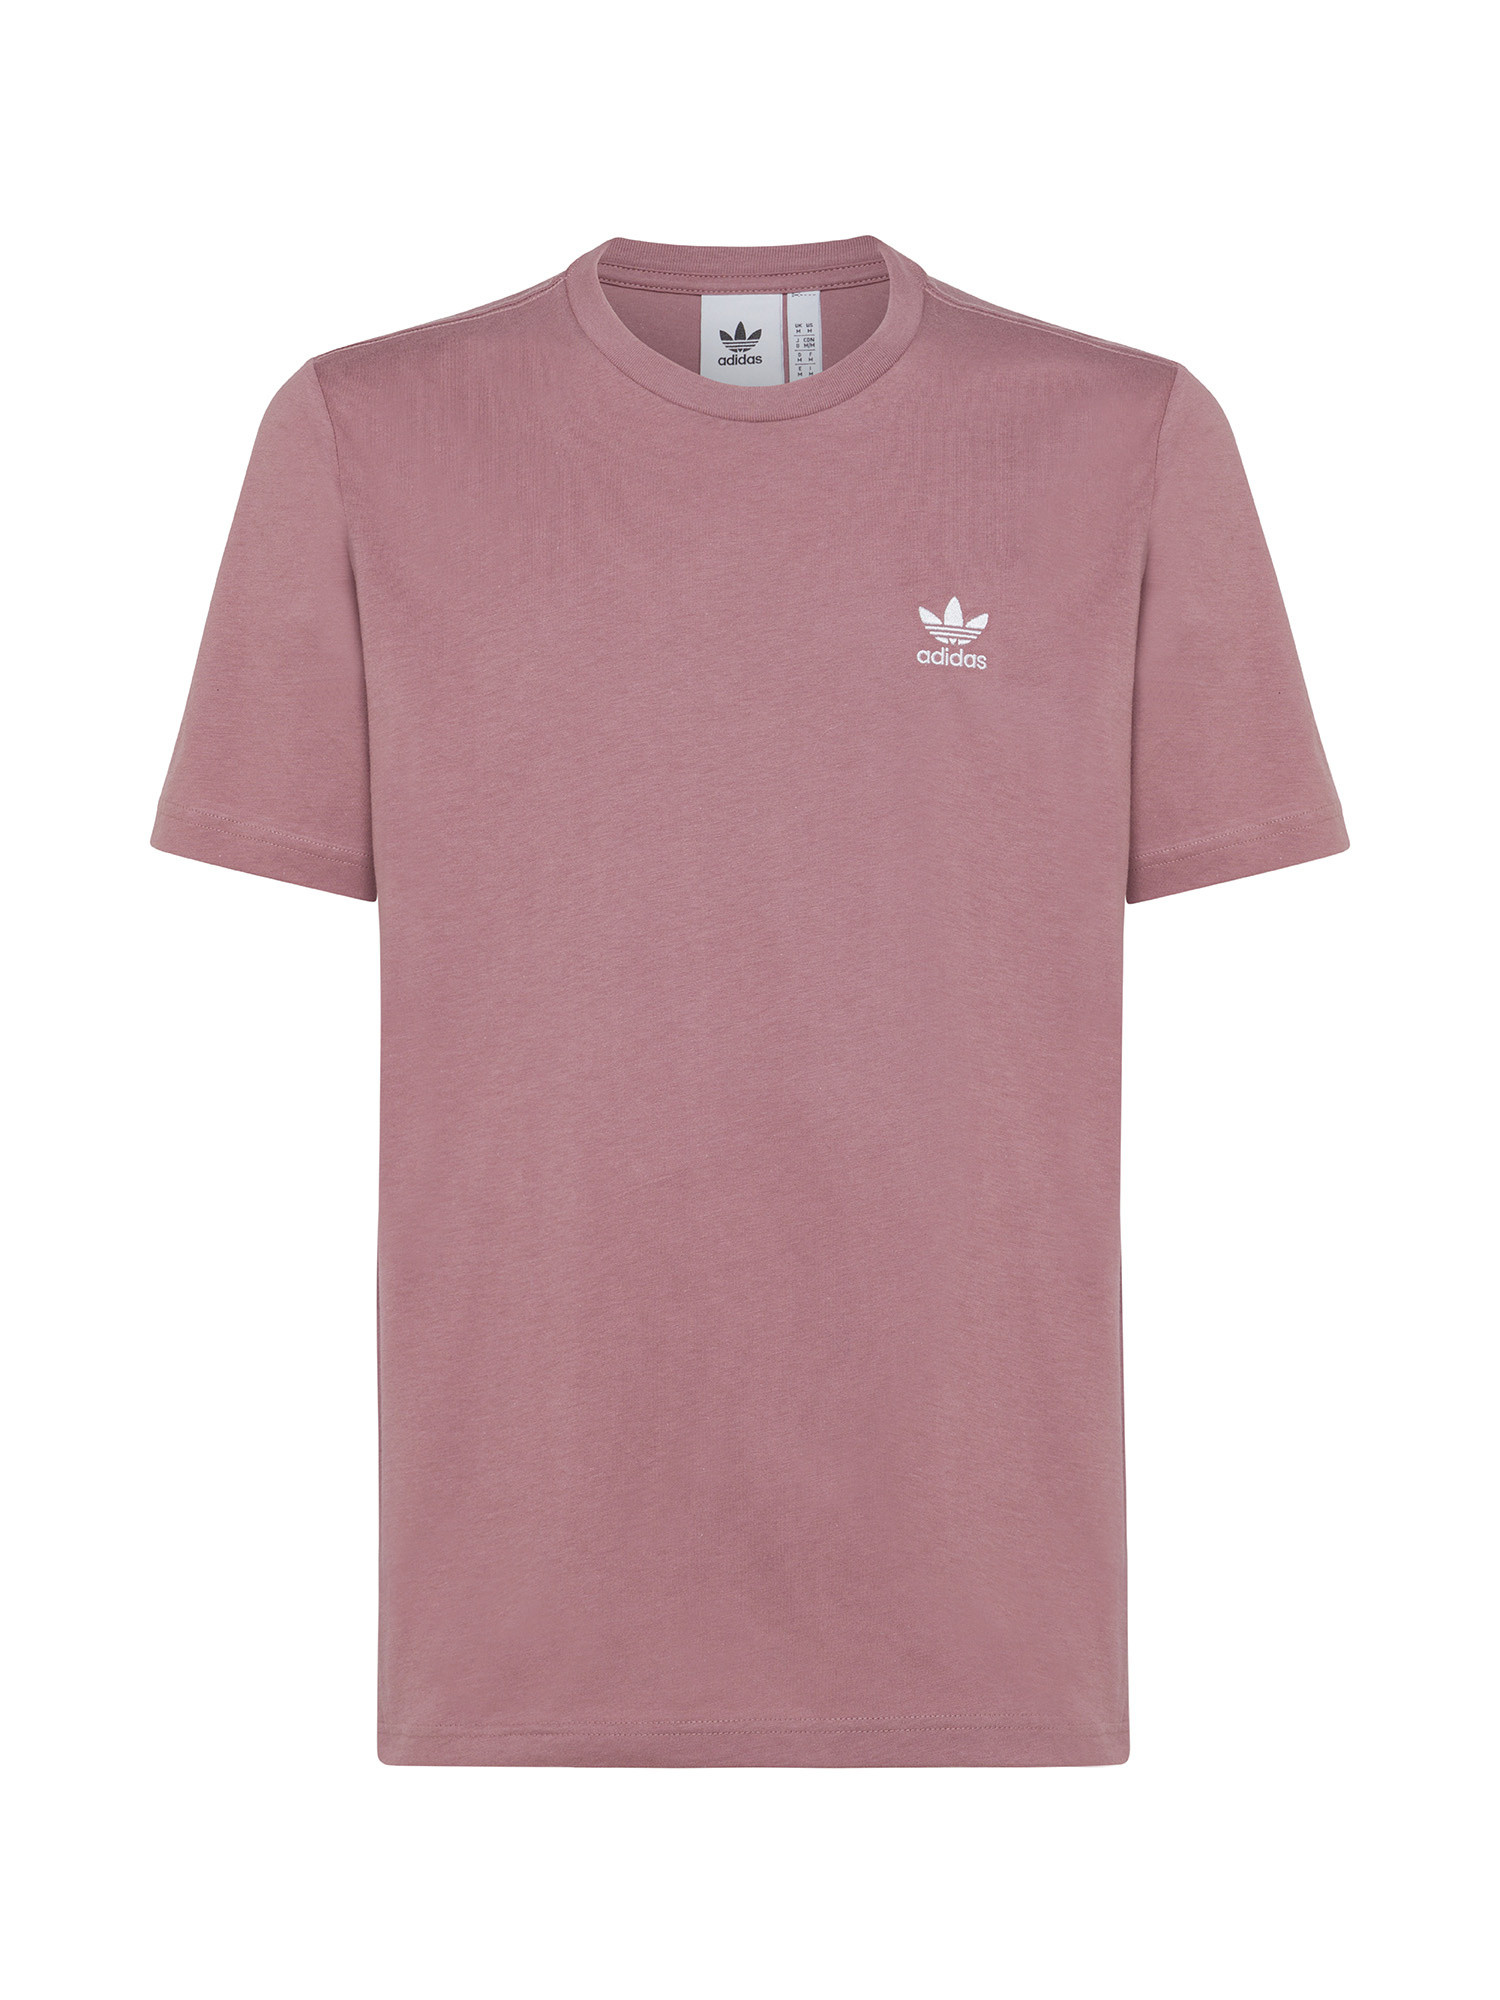 Adidas - Crewneck T-shirt with logo, Antique Pink, large image number 0